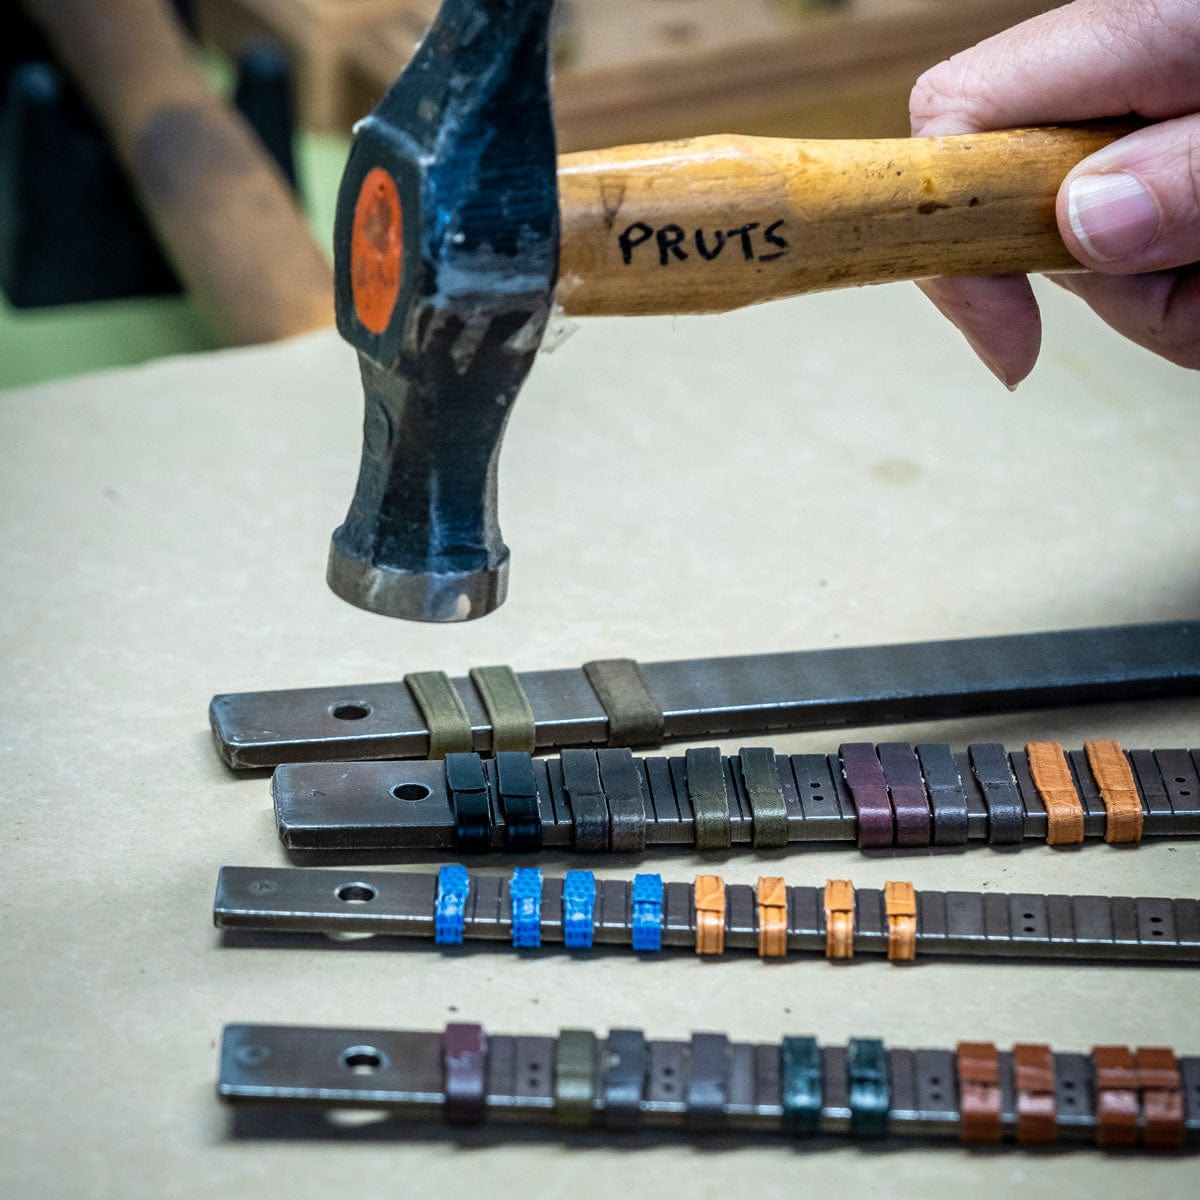 Boutsen Racing Handmade Leather Watch Strap - Khaki